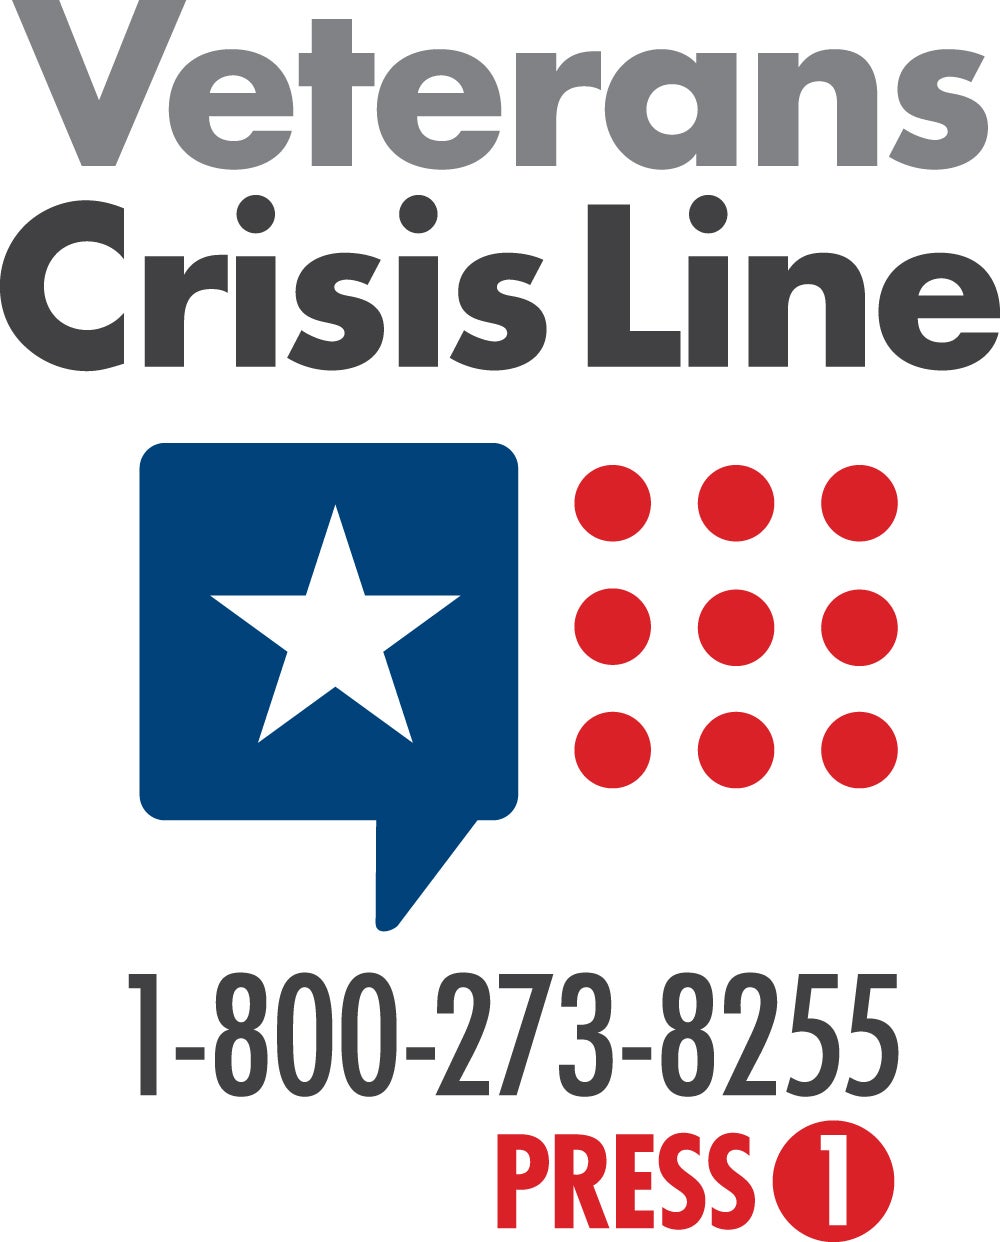 veterans crisis line logo call 1-800-273-8255